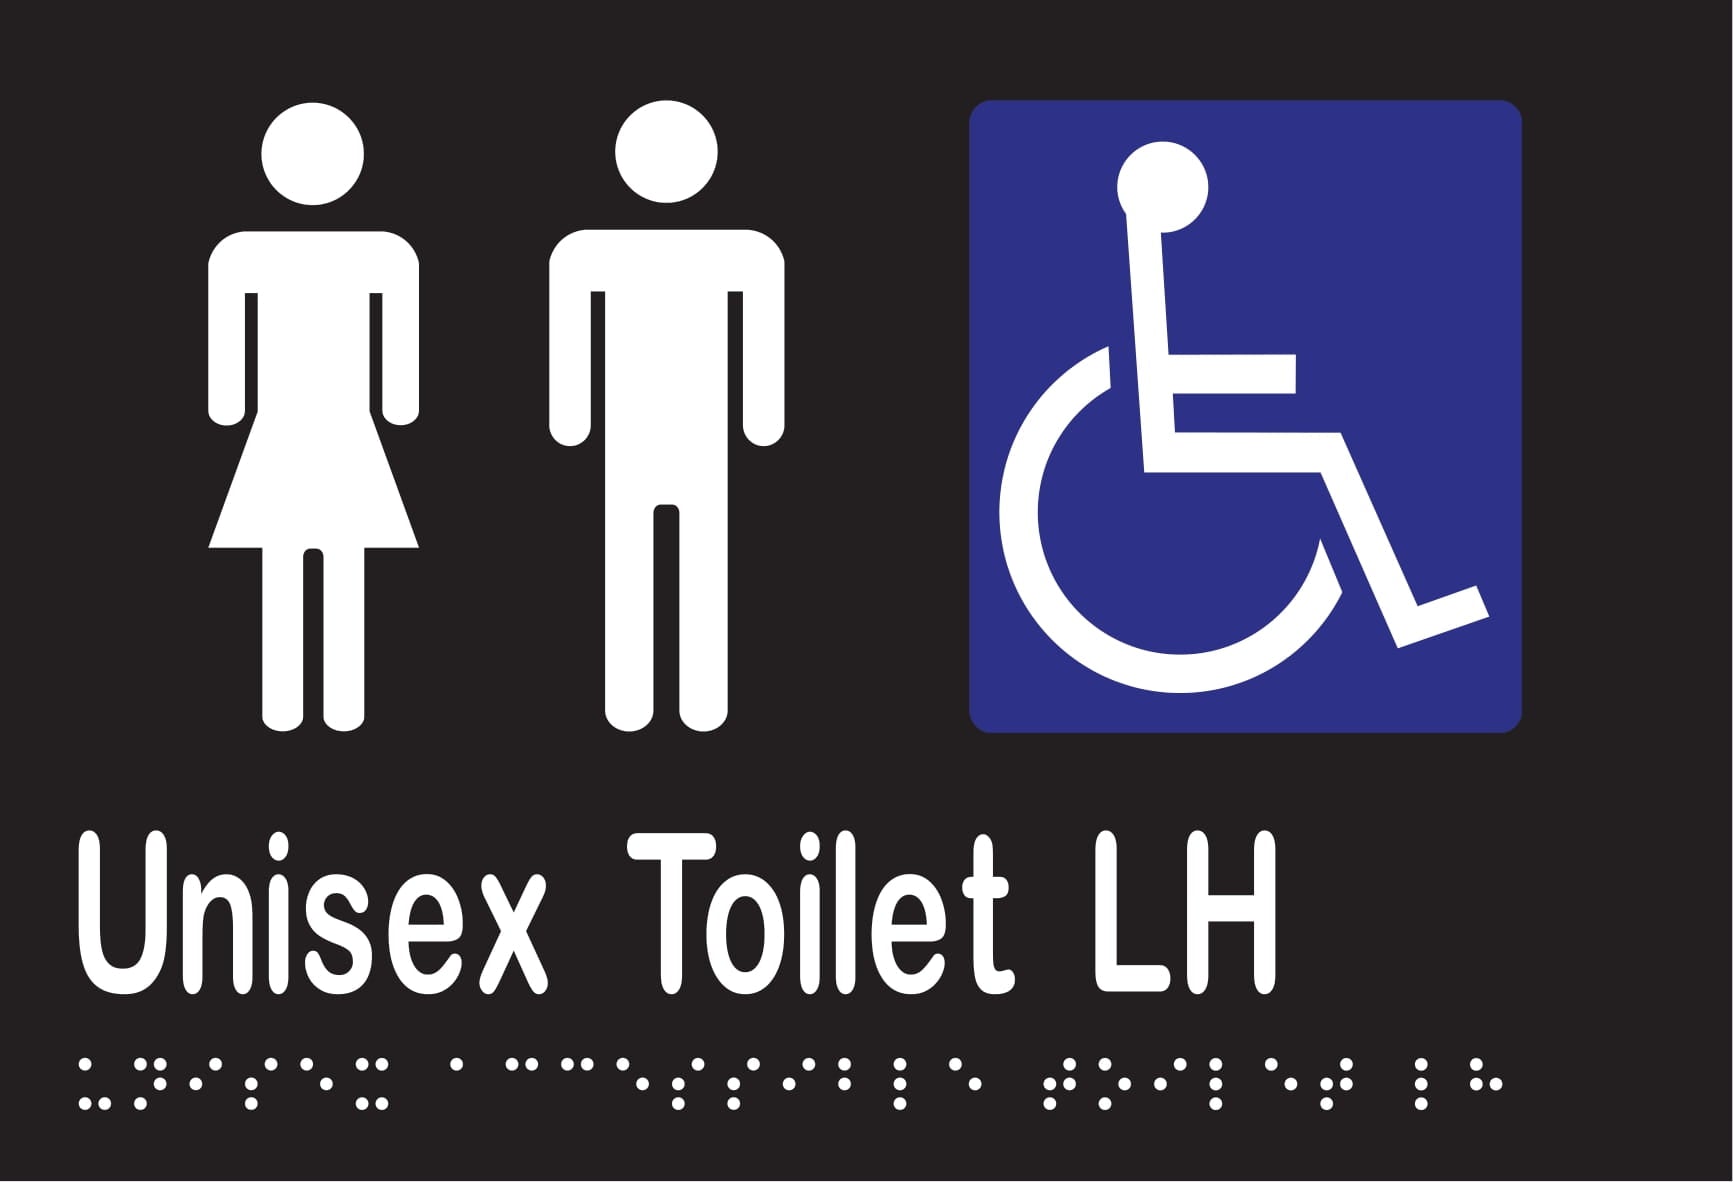 Unisex Accessible Toilet LH Braille